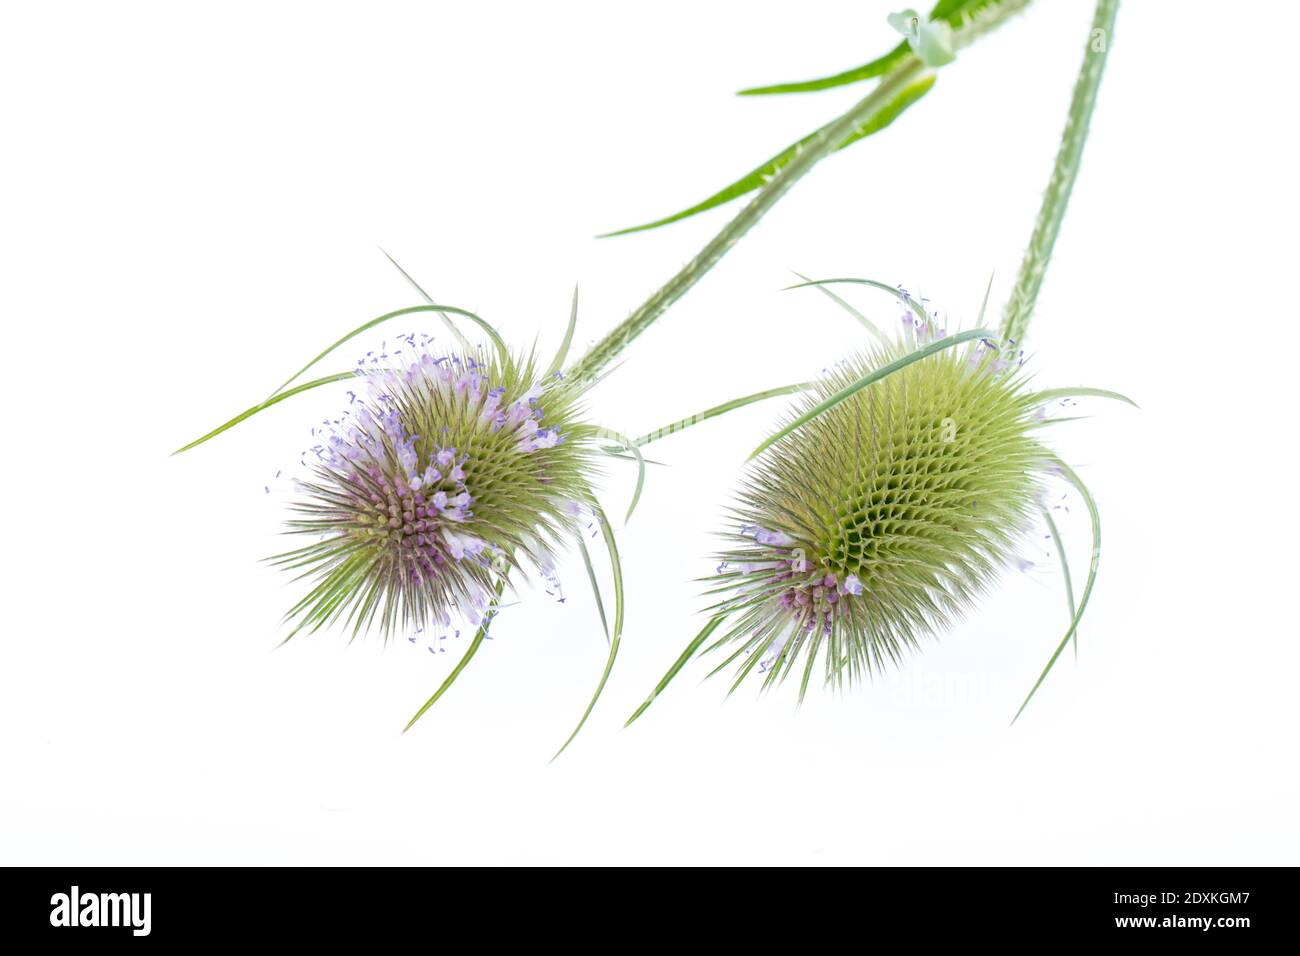 Piante curative: (Dipsacus sylvestris) Teasel - 2 fiori giacenti su bianco Foto Stock